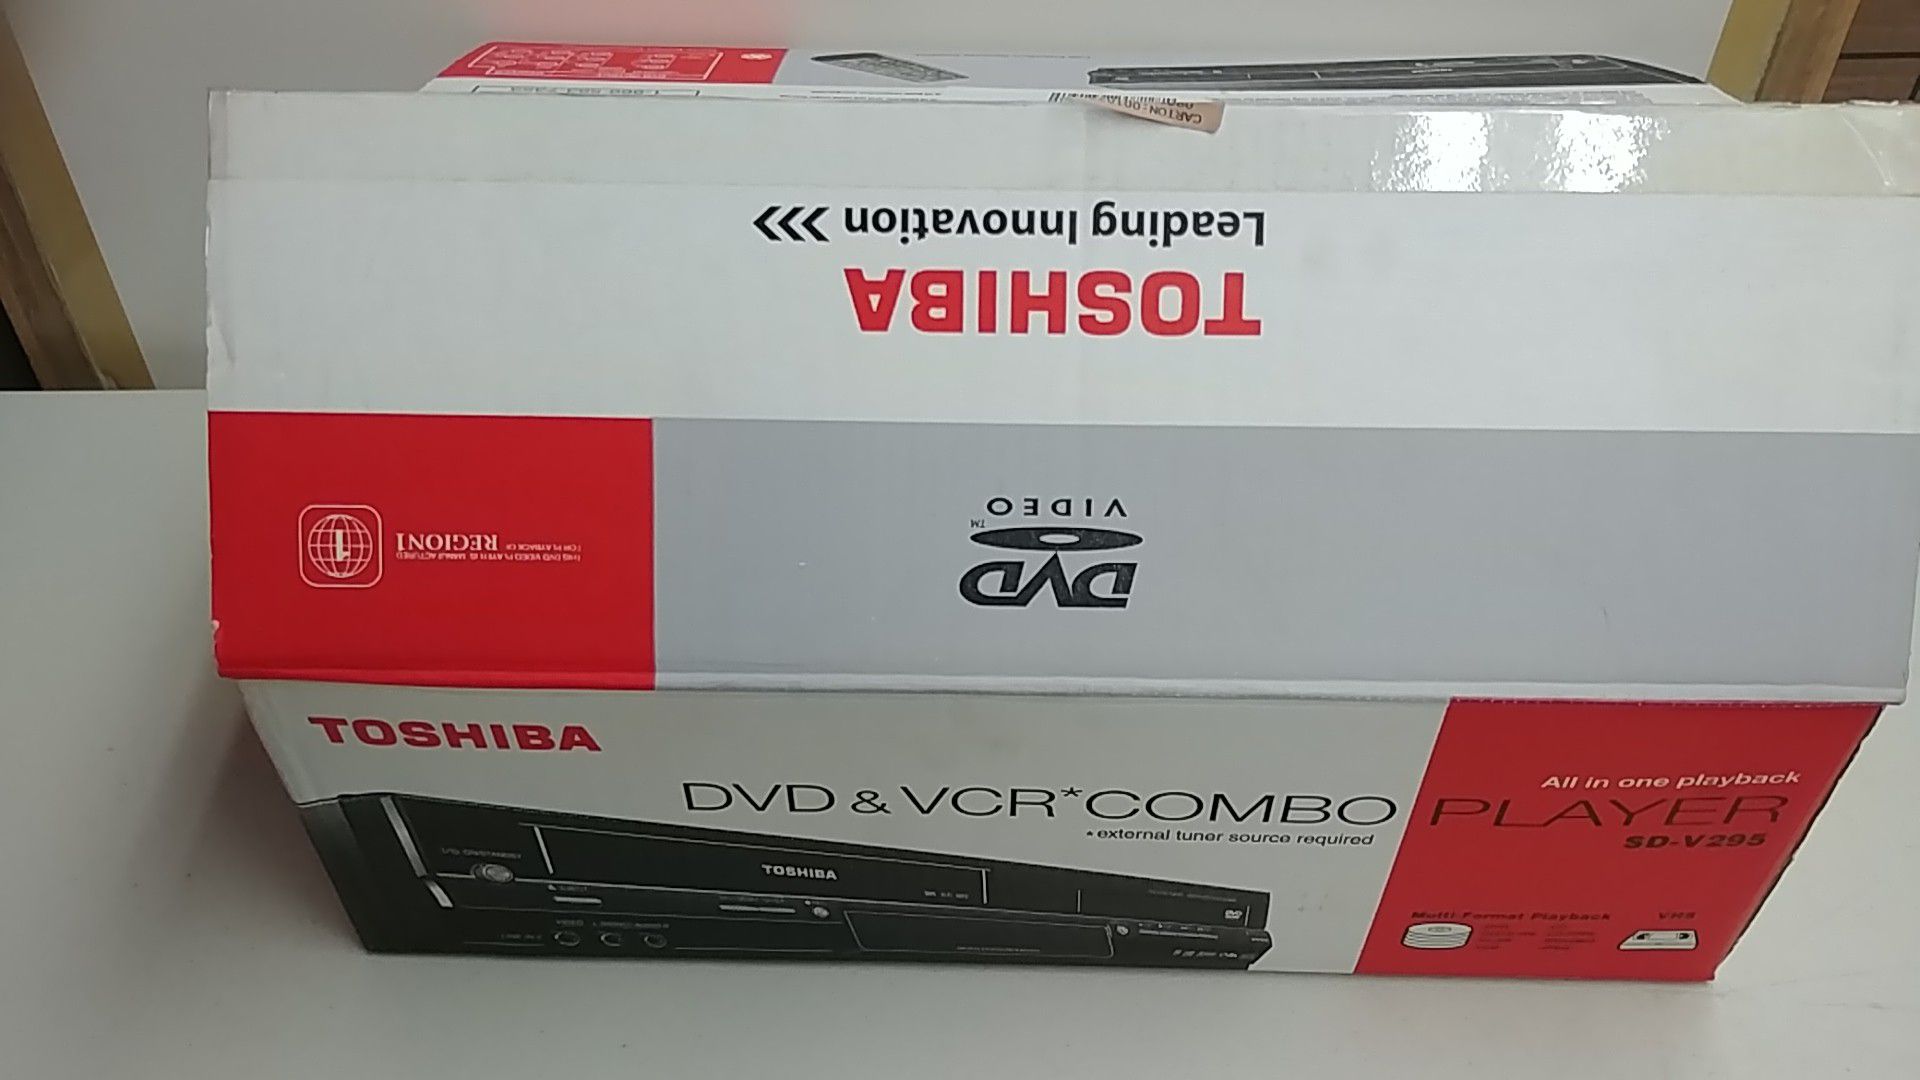 Toshiba DVD &VCR COMBO SD-V295